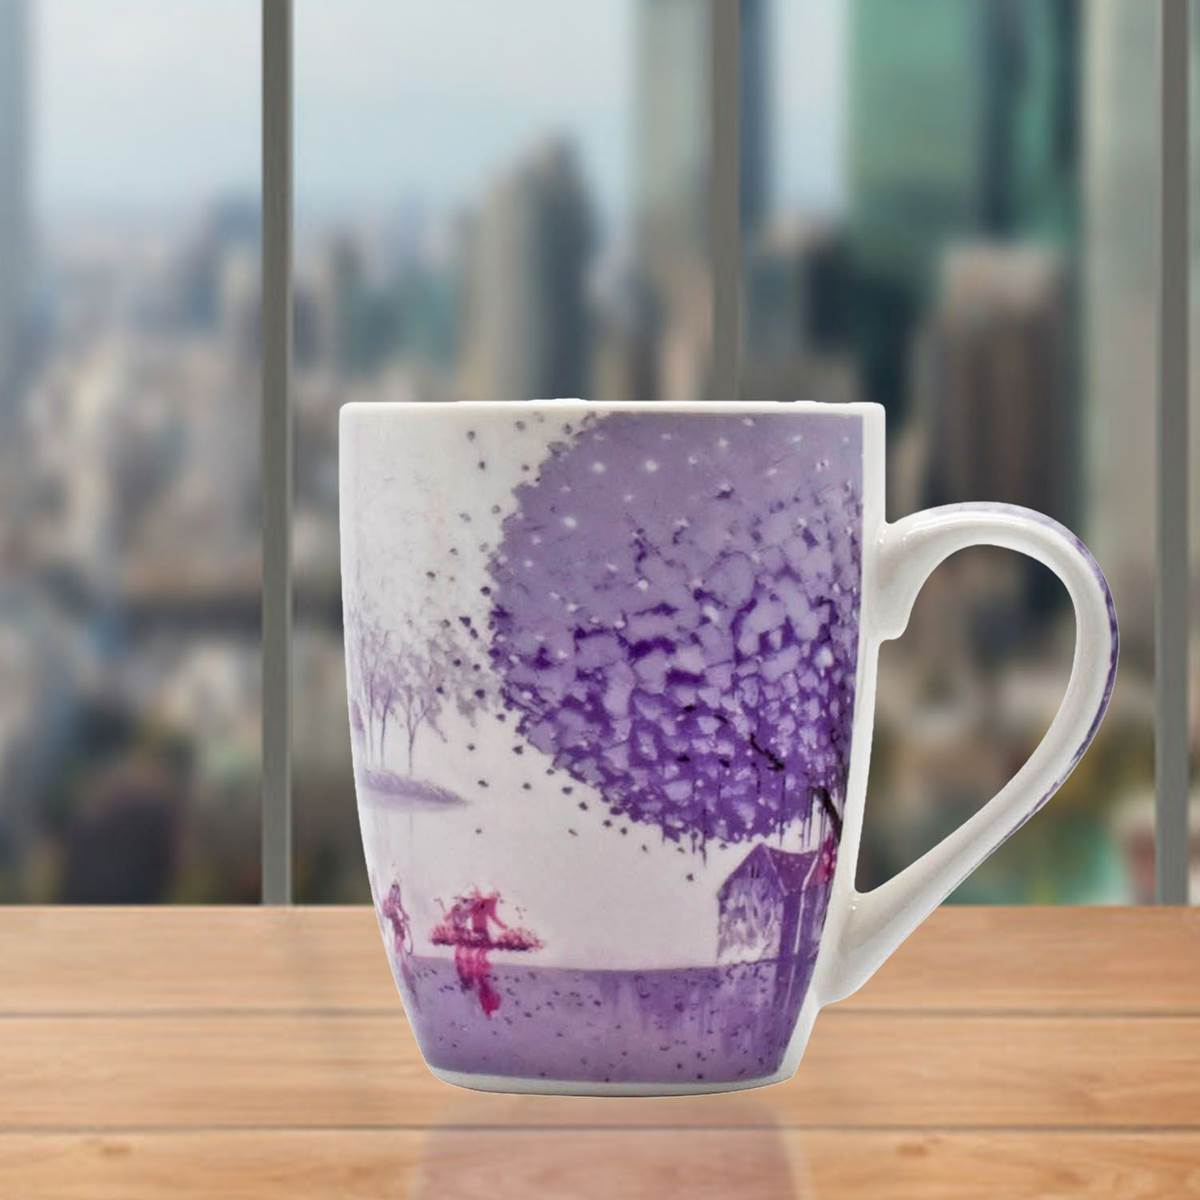 Printed Ceramic Coffee or Tea Mug with handle - 325ml (BPM2633-A)